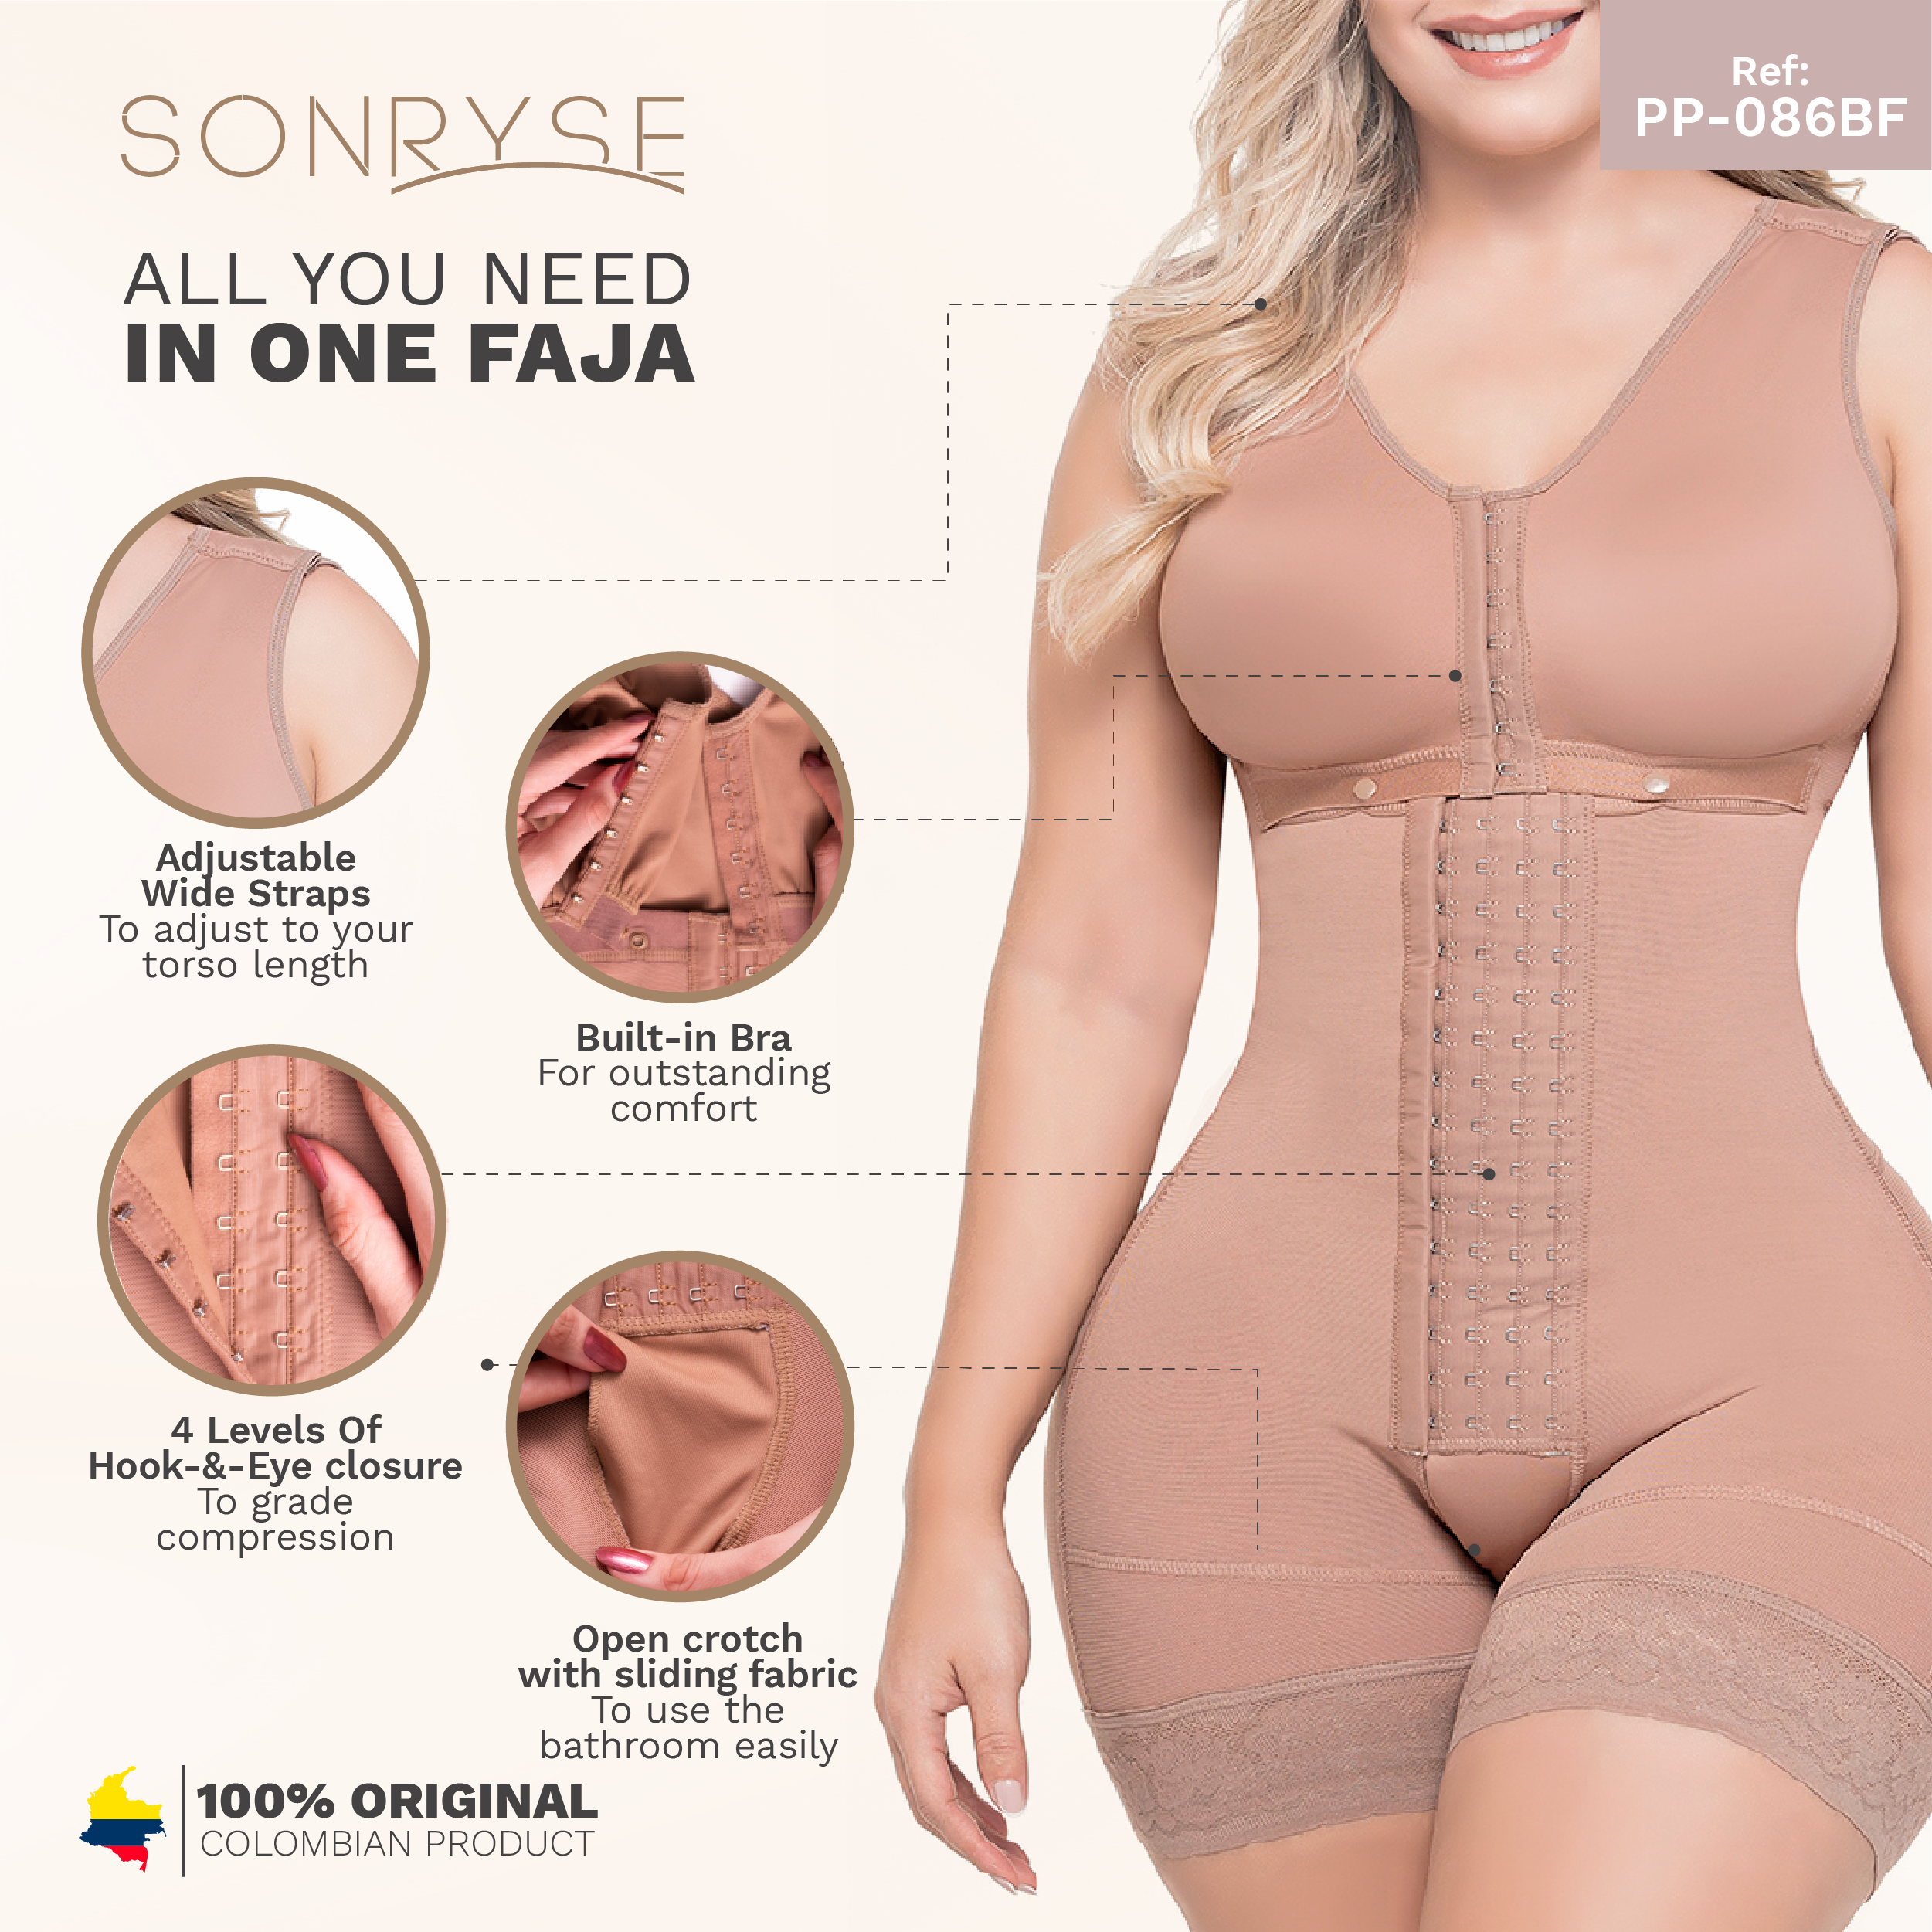 SONRYSE Sonryse P86 Fajas colombianas Postparto cesarea csection